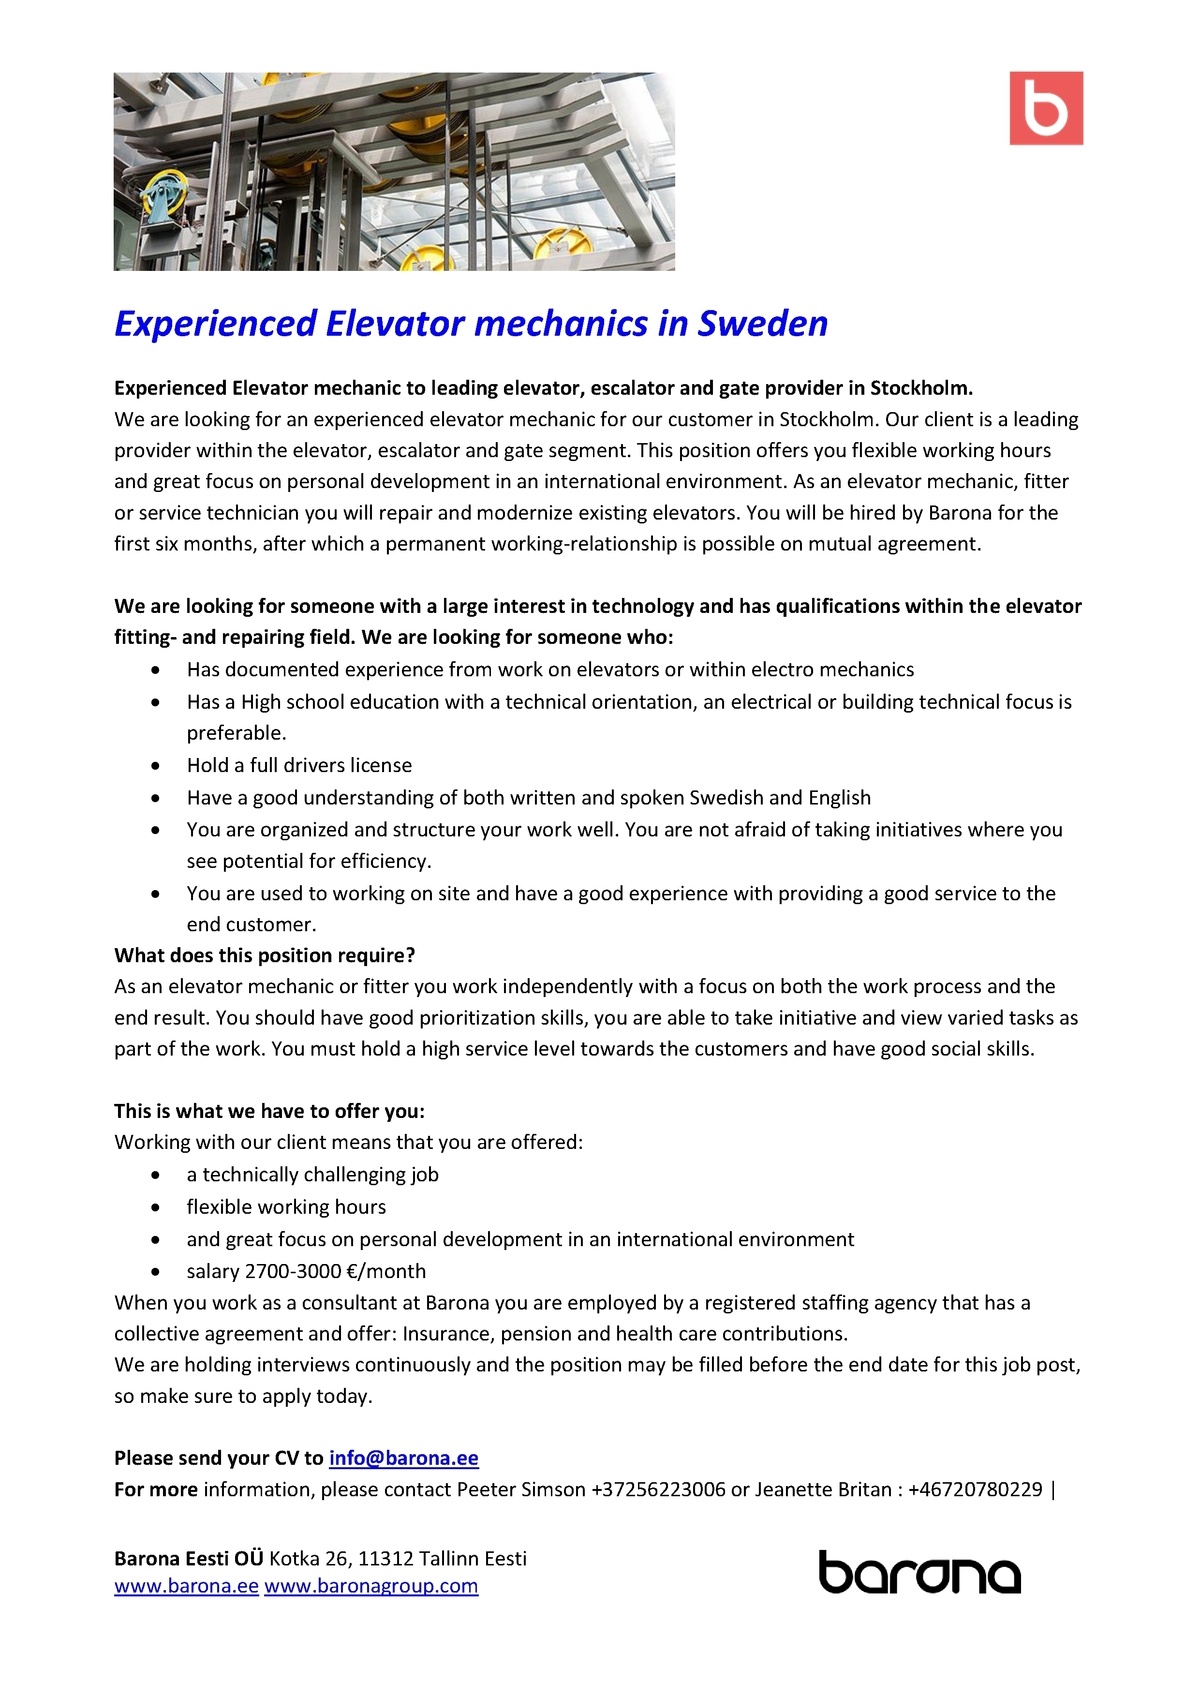 Barona Eesti OÜ Experienced Elevator mechanics in Sweden